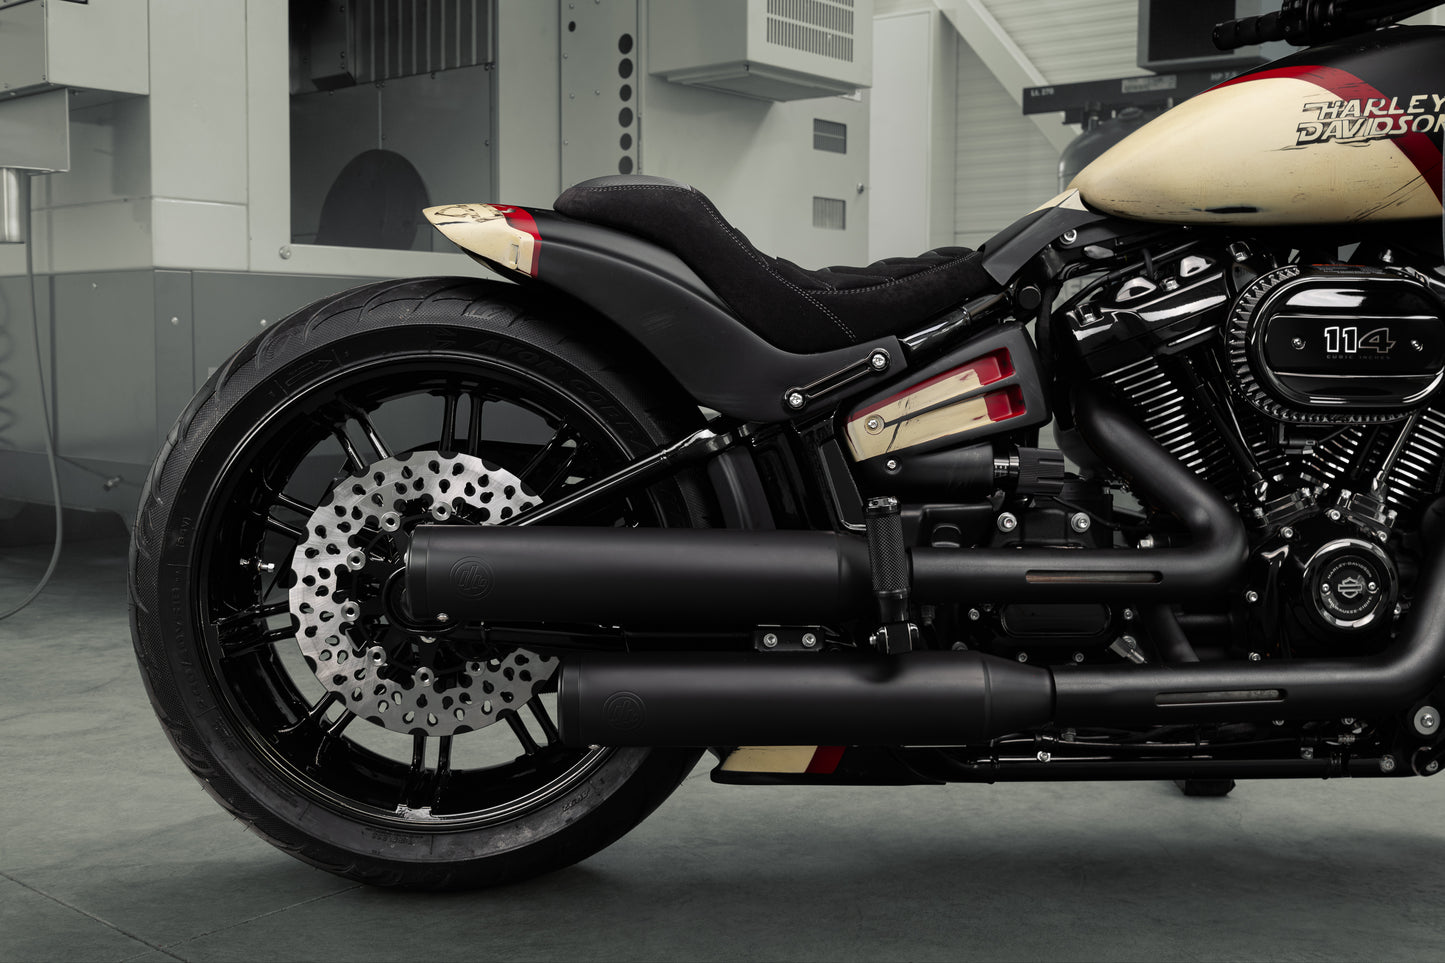 Harley Davidson motorcycle with Killer Custom "Avenger" rear fender kit from the side in a modern bike shop